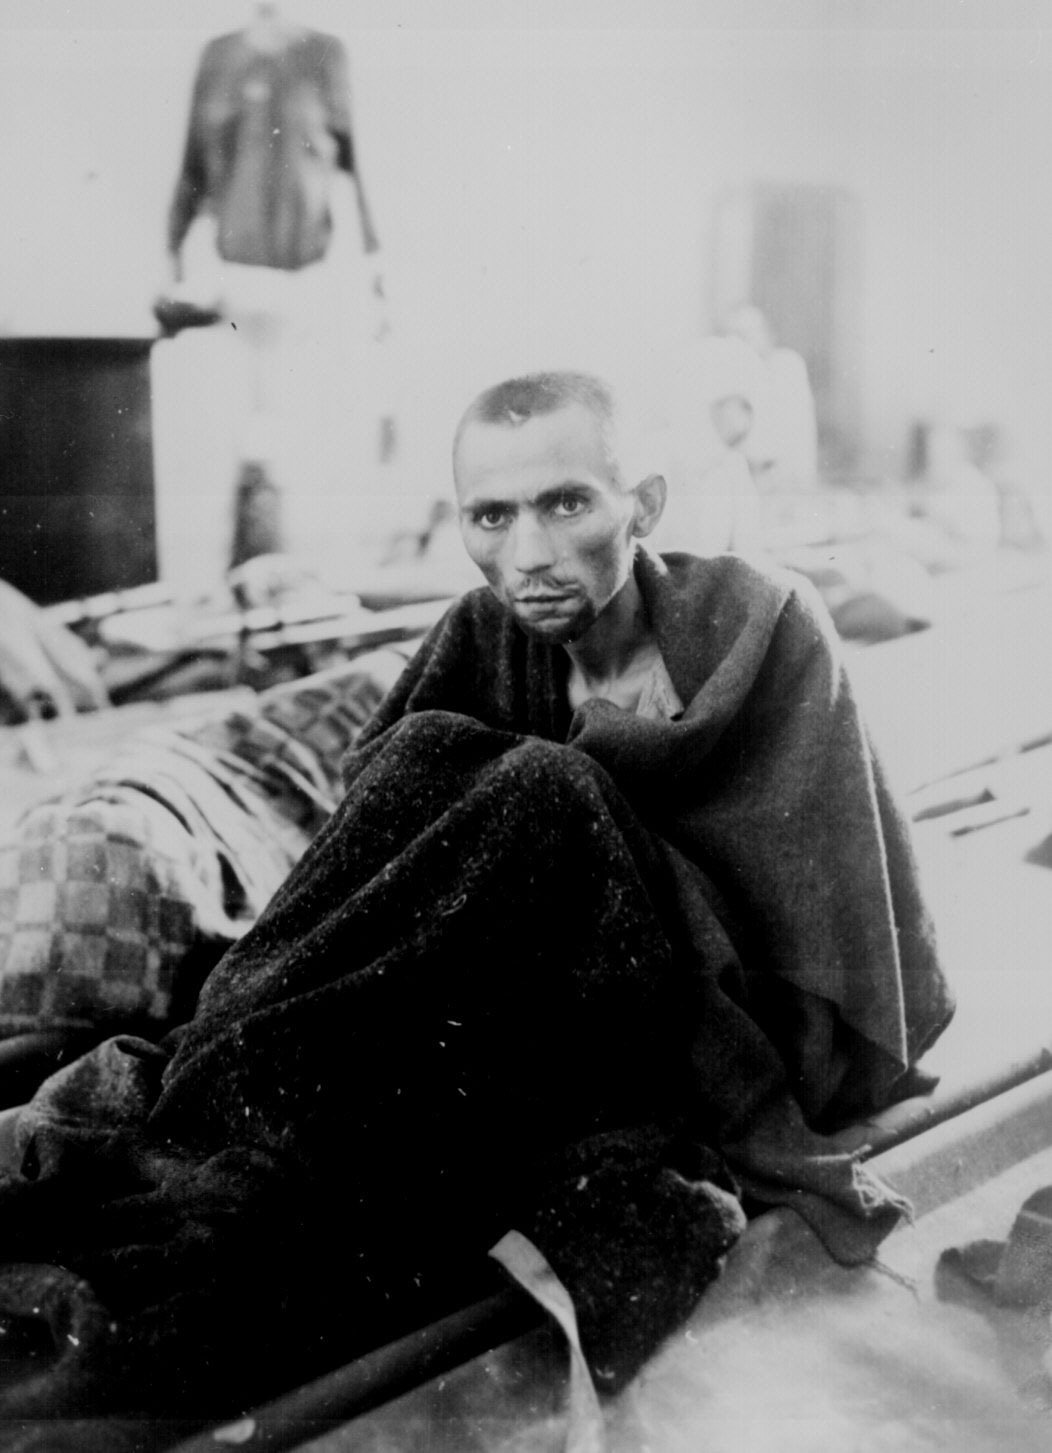 Starving inmate of Camp Gusen, Austria, 12 May 1945